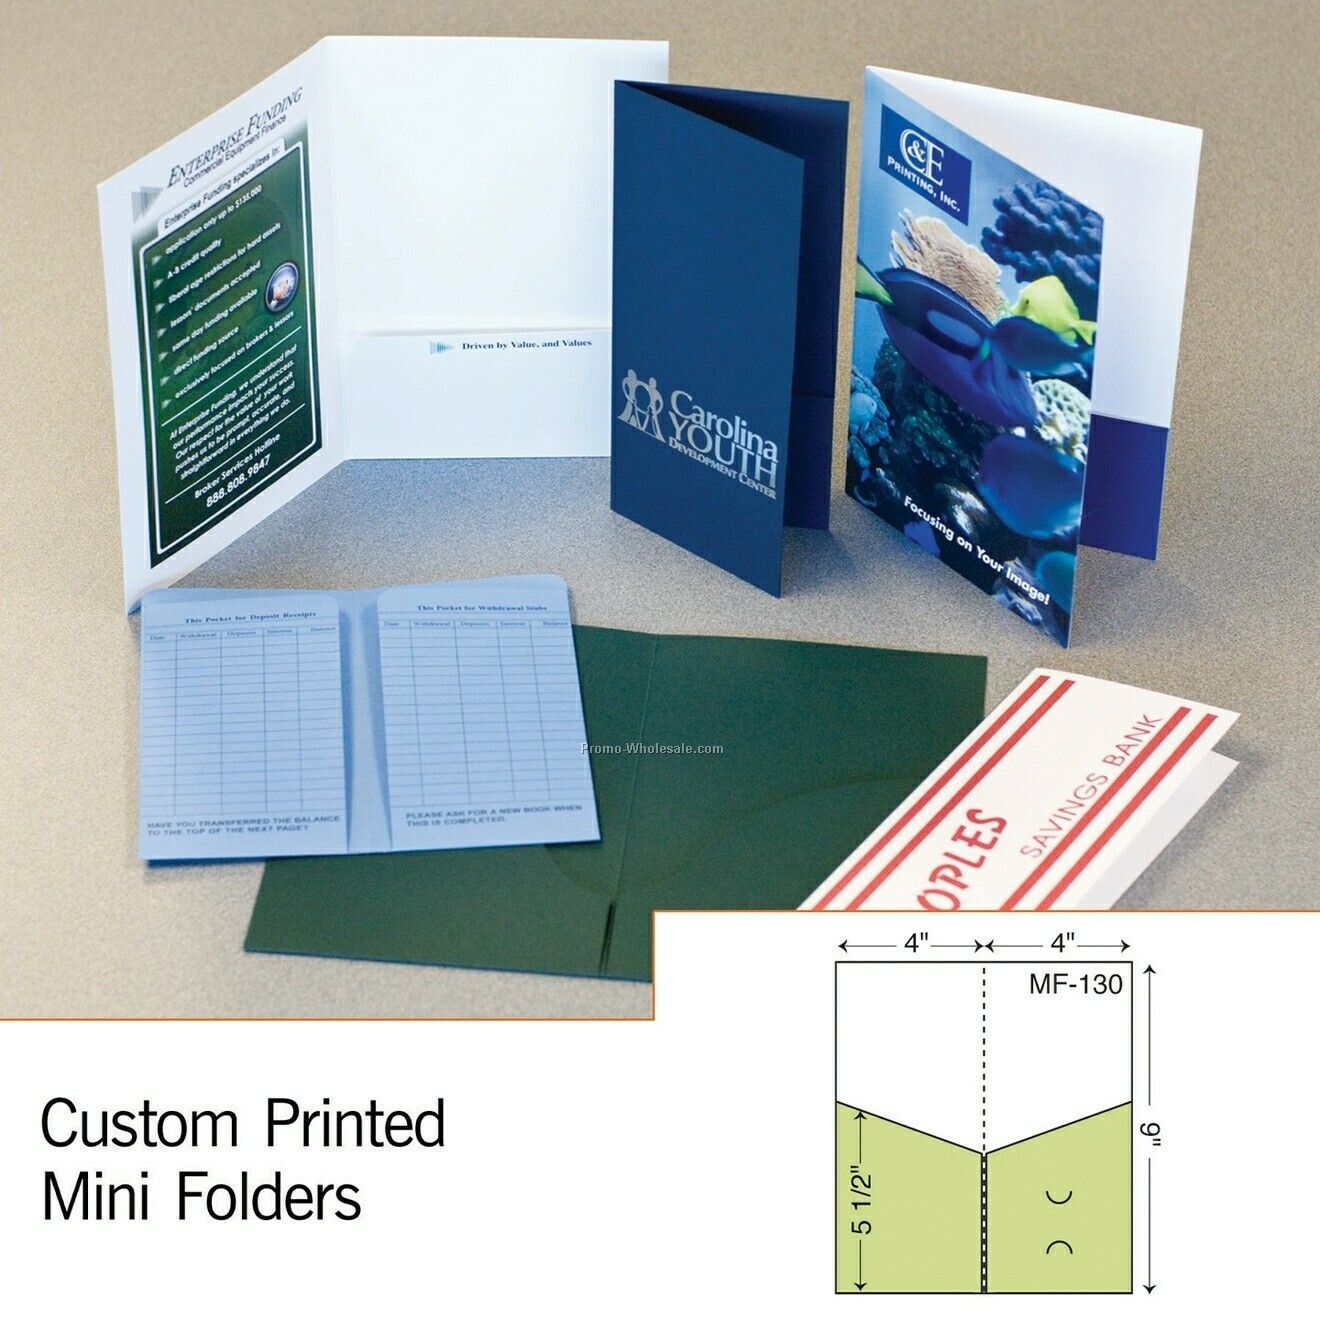 4"x9" Mini Folder W/ Left Pocket (1 Color)